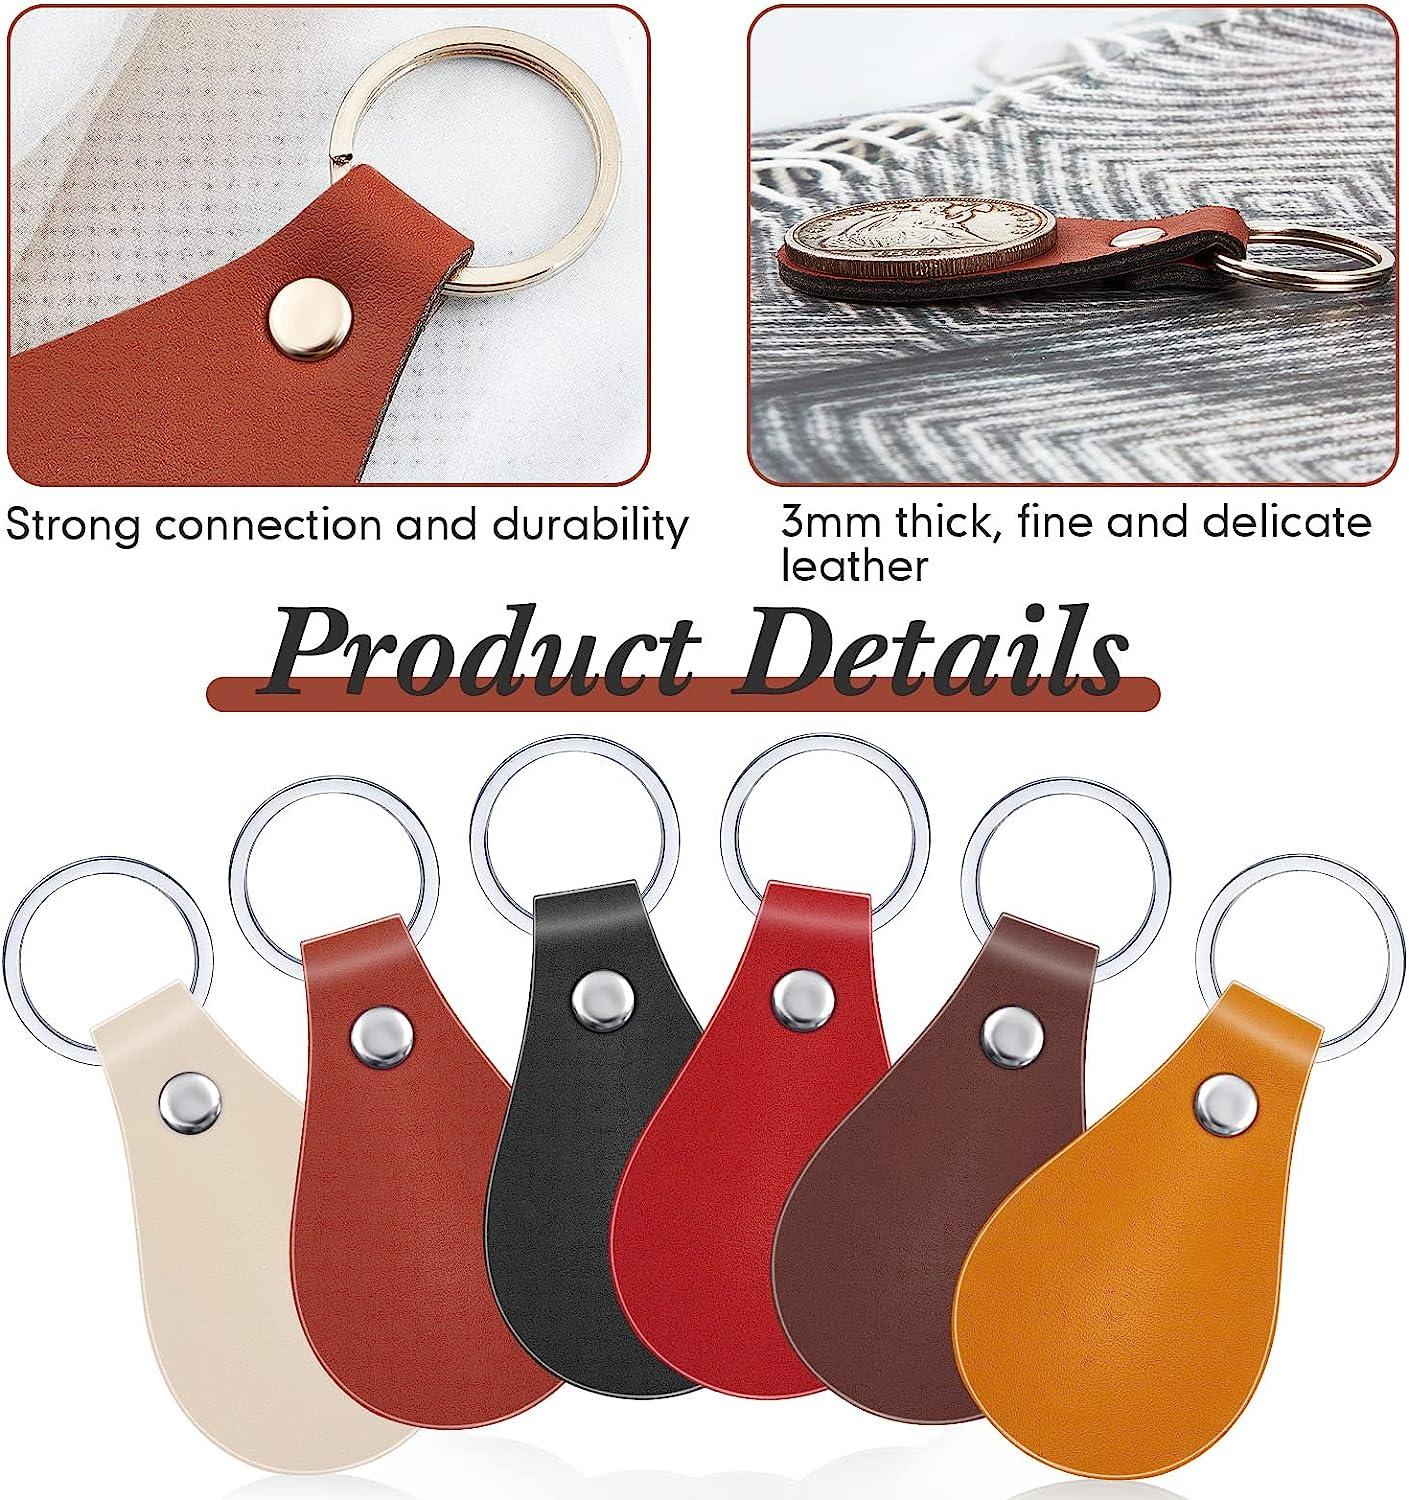 30 Pcs Leather Key Fob Kit for DIY Craft, PU Leather Key Fobs